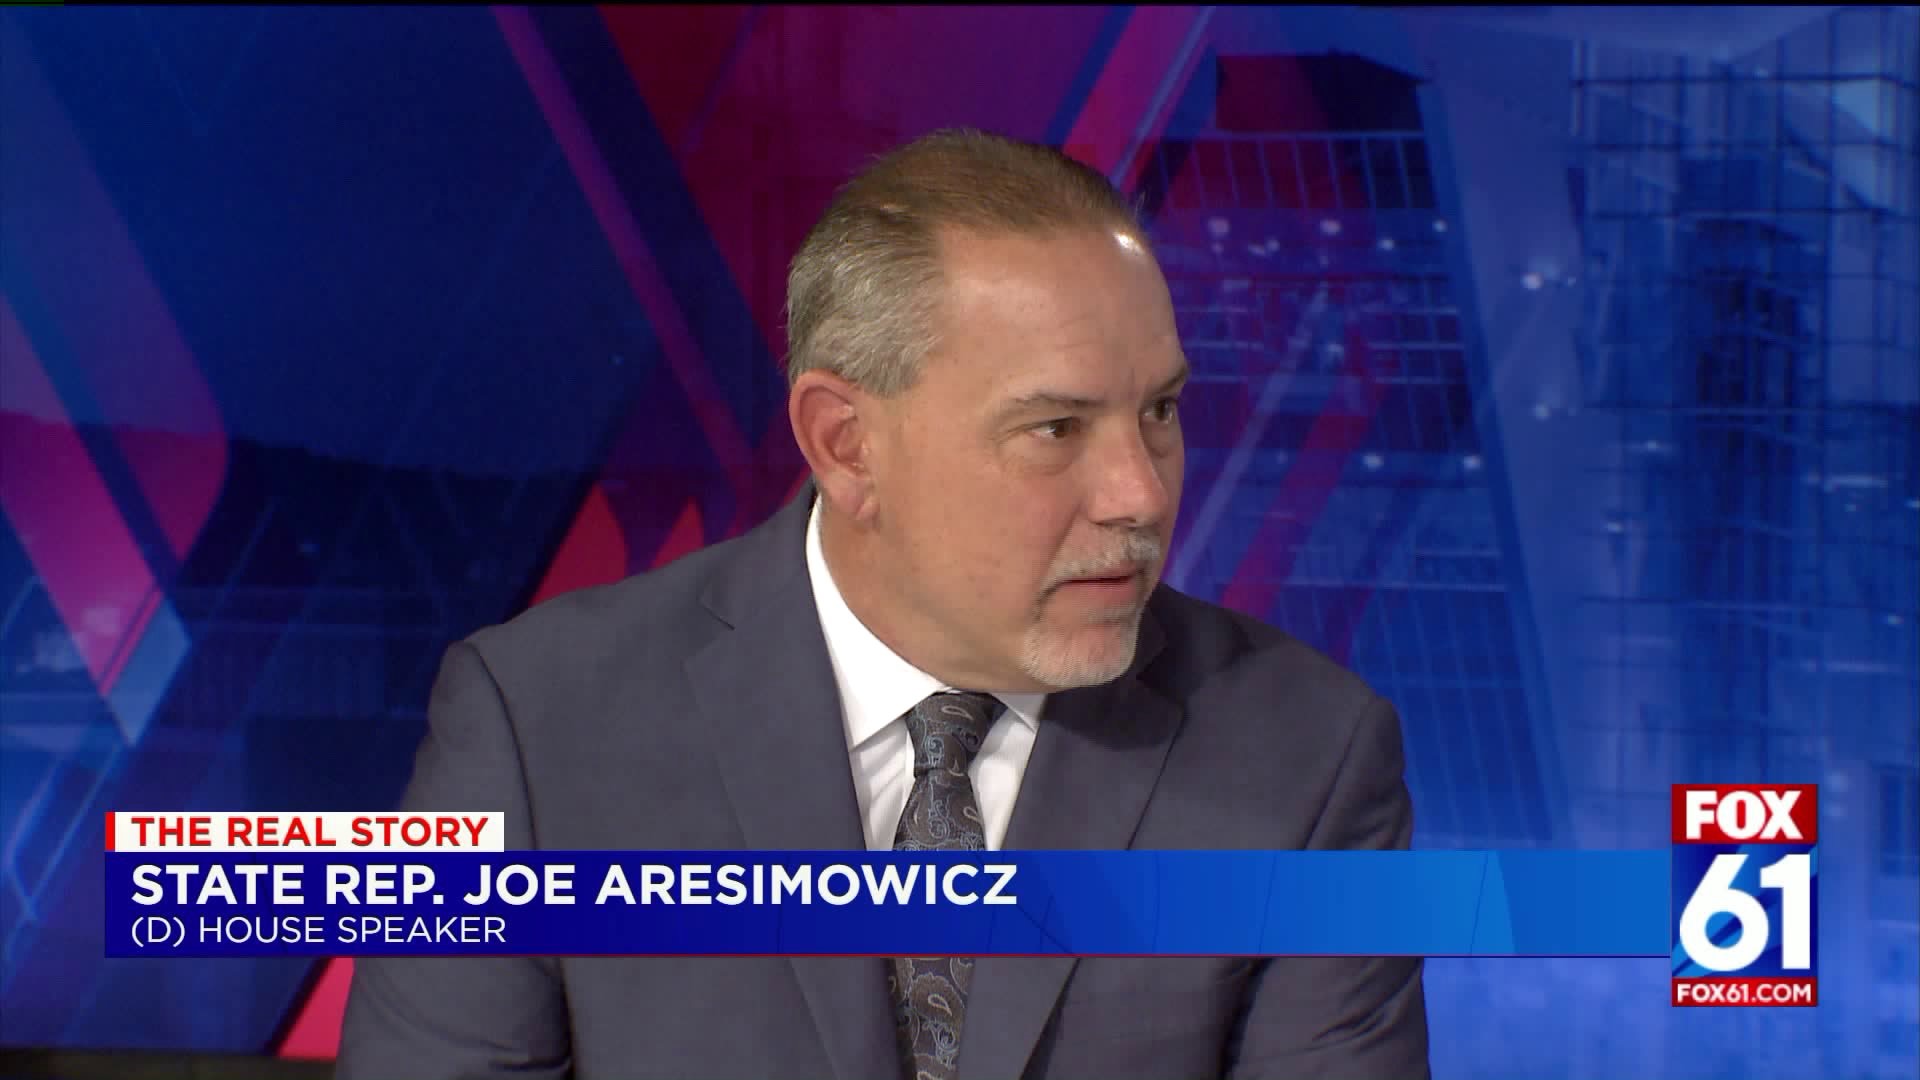 RealStory: Speaker Joe Aresimowicz on Rep Orange, tolls